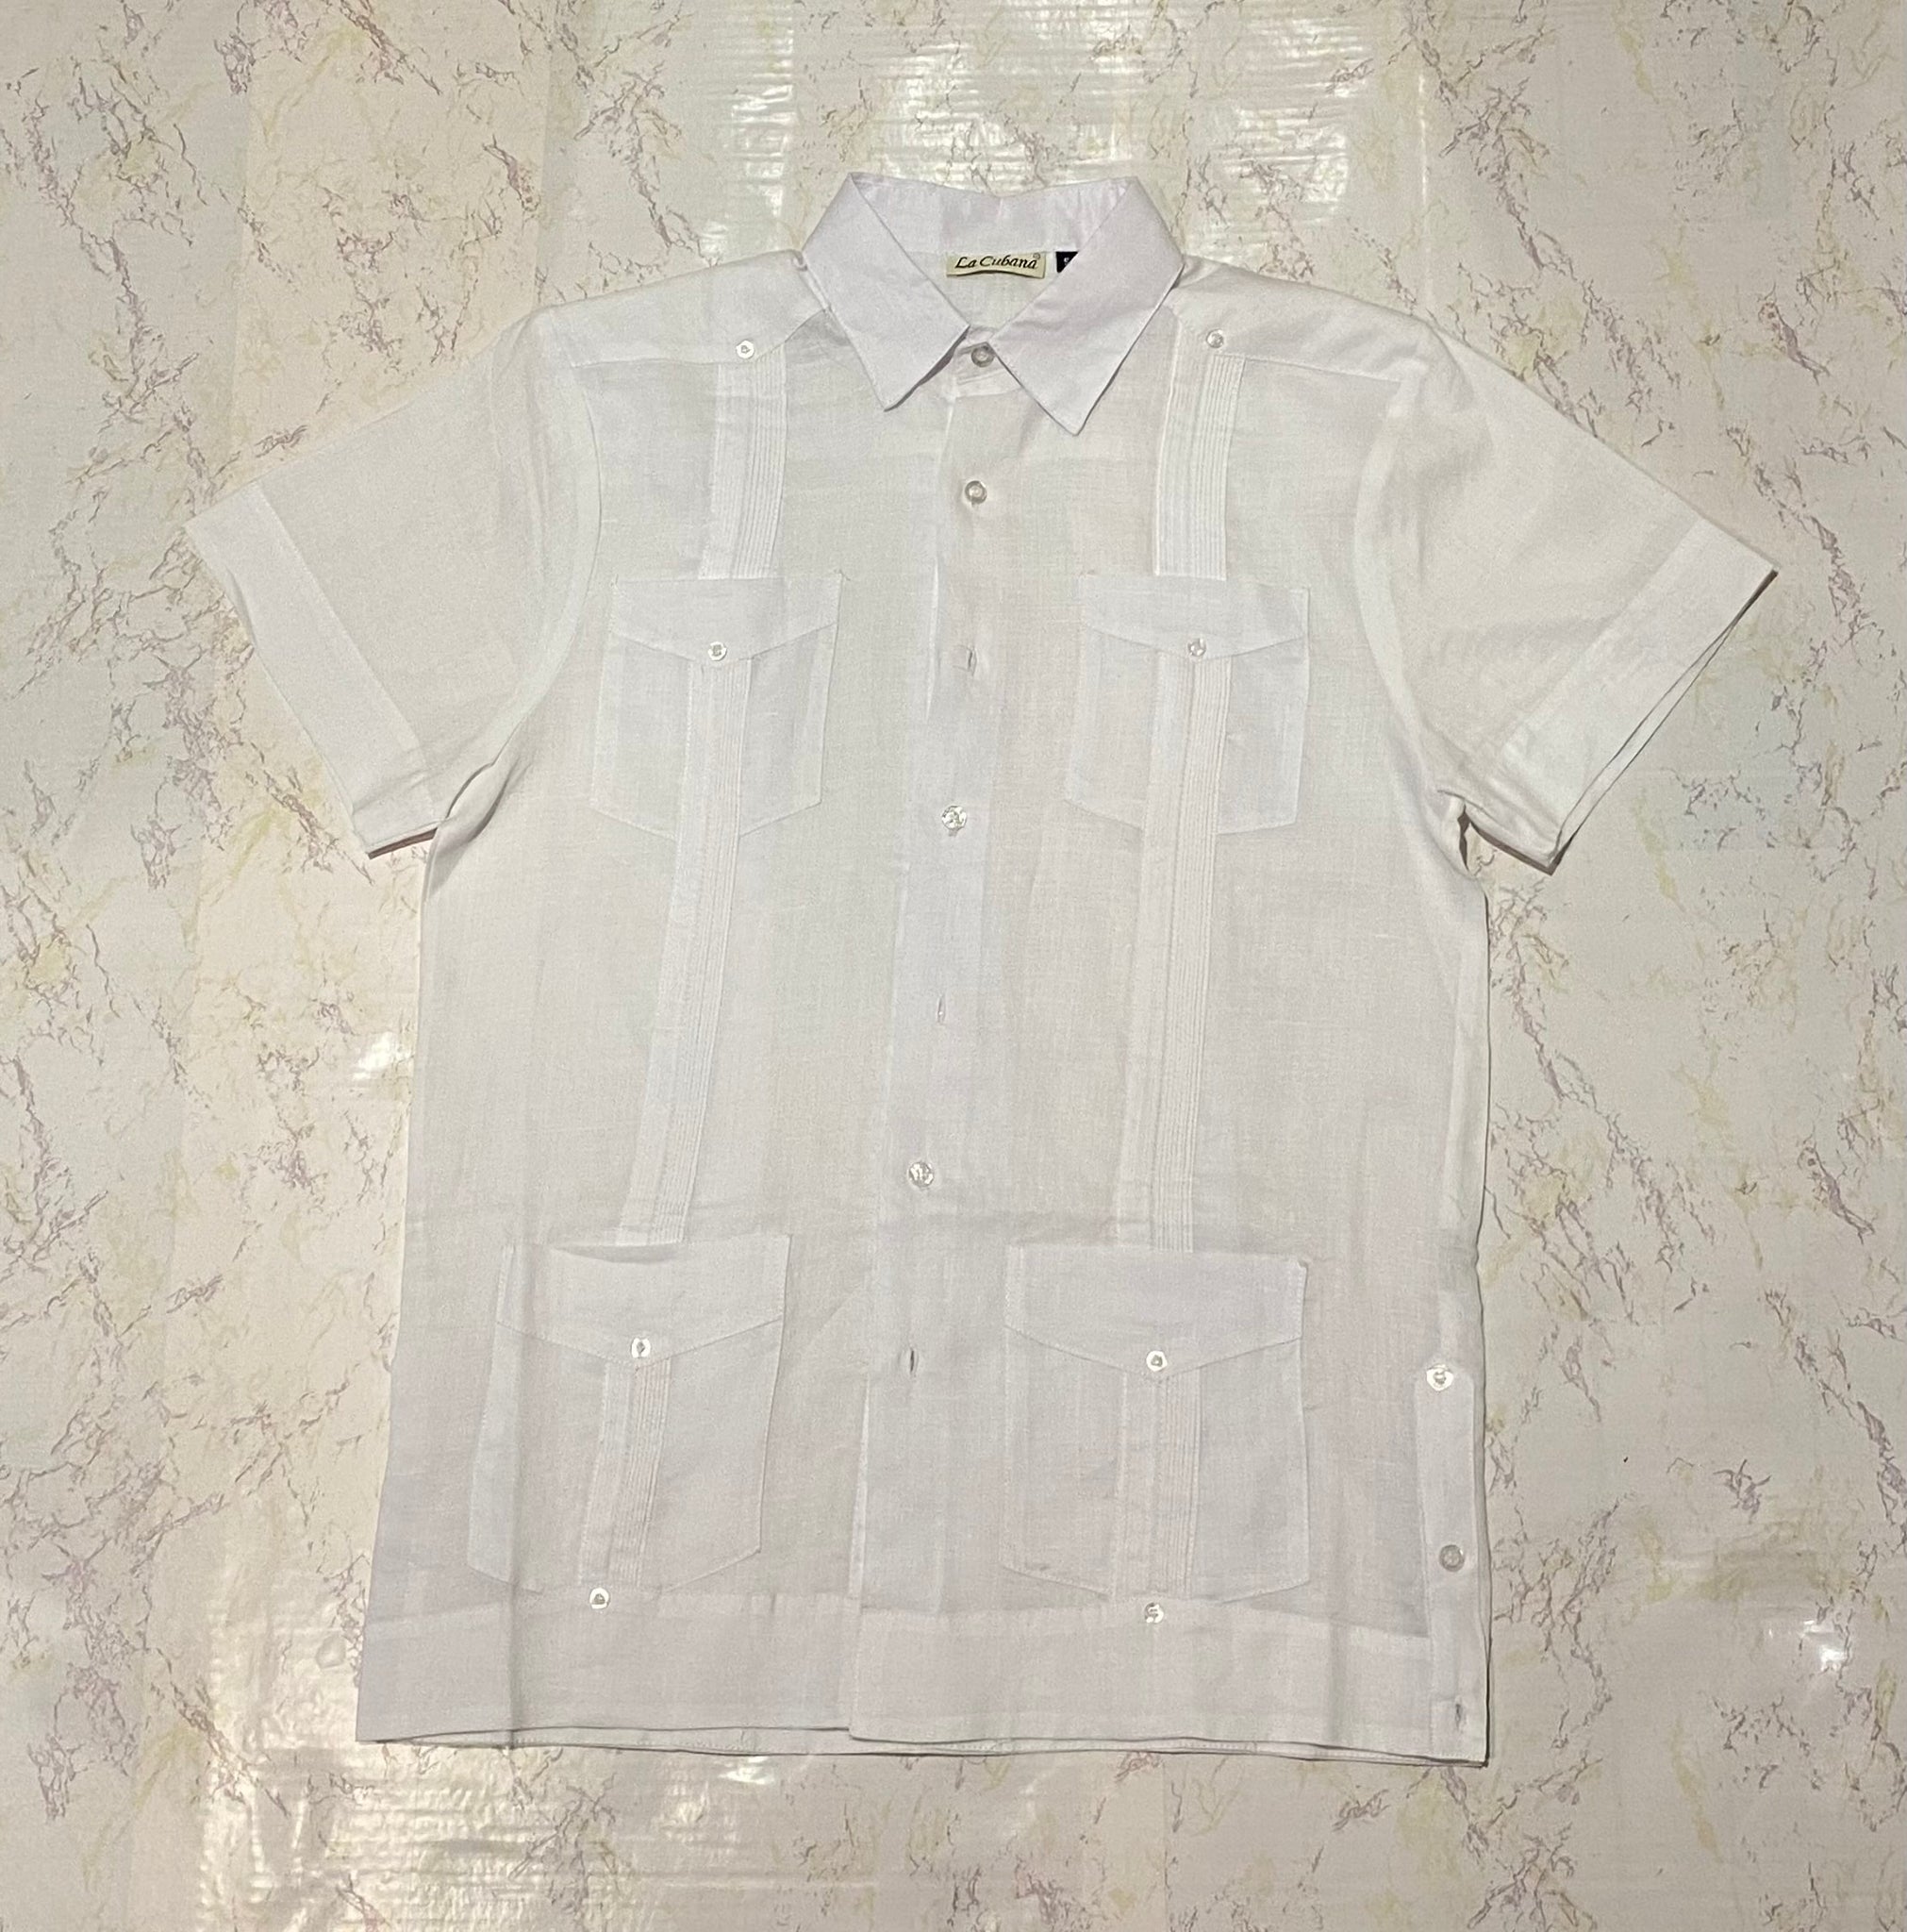 Handkerchief "Hanky" 100% Linen Guayabera - Traditional Style - Off White